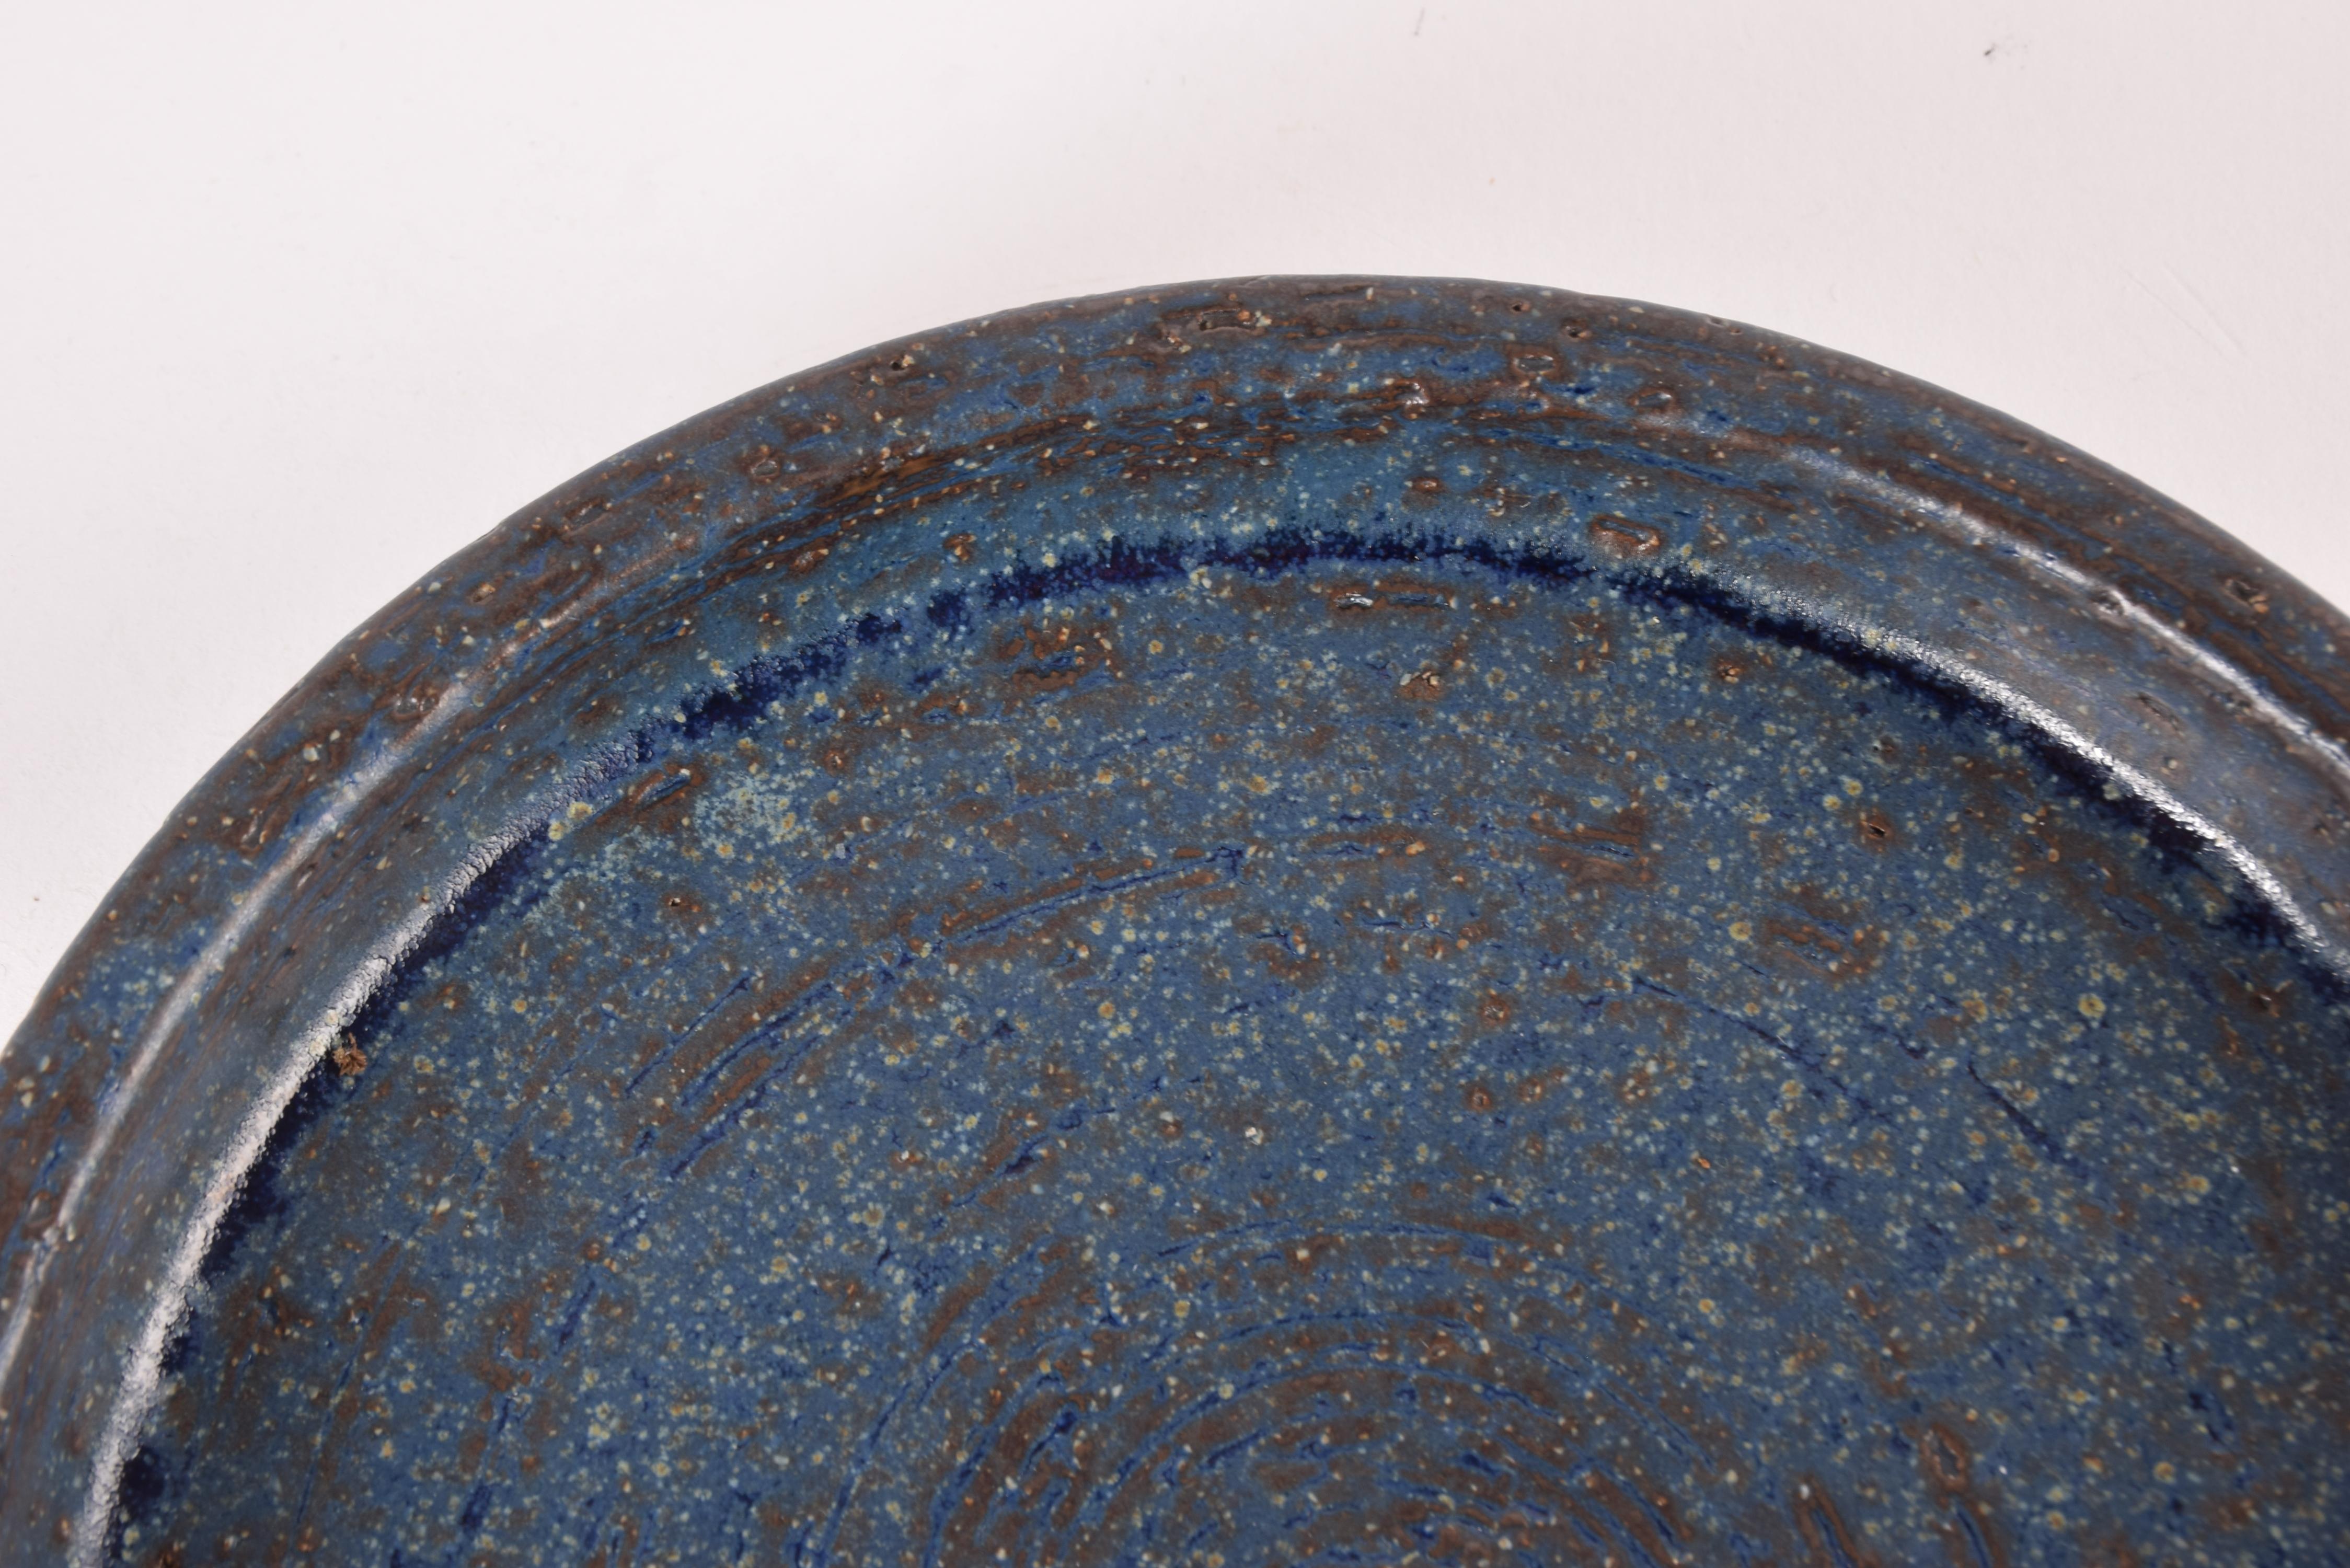 Palshus Low Round Bowl Dish with Dark Blue Glaze, Danish Modern Ceramic 1960s In Good Condition For Sale In Aarhus C, DK